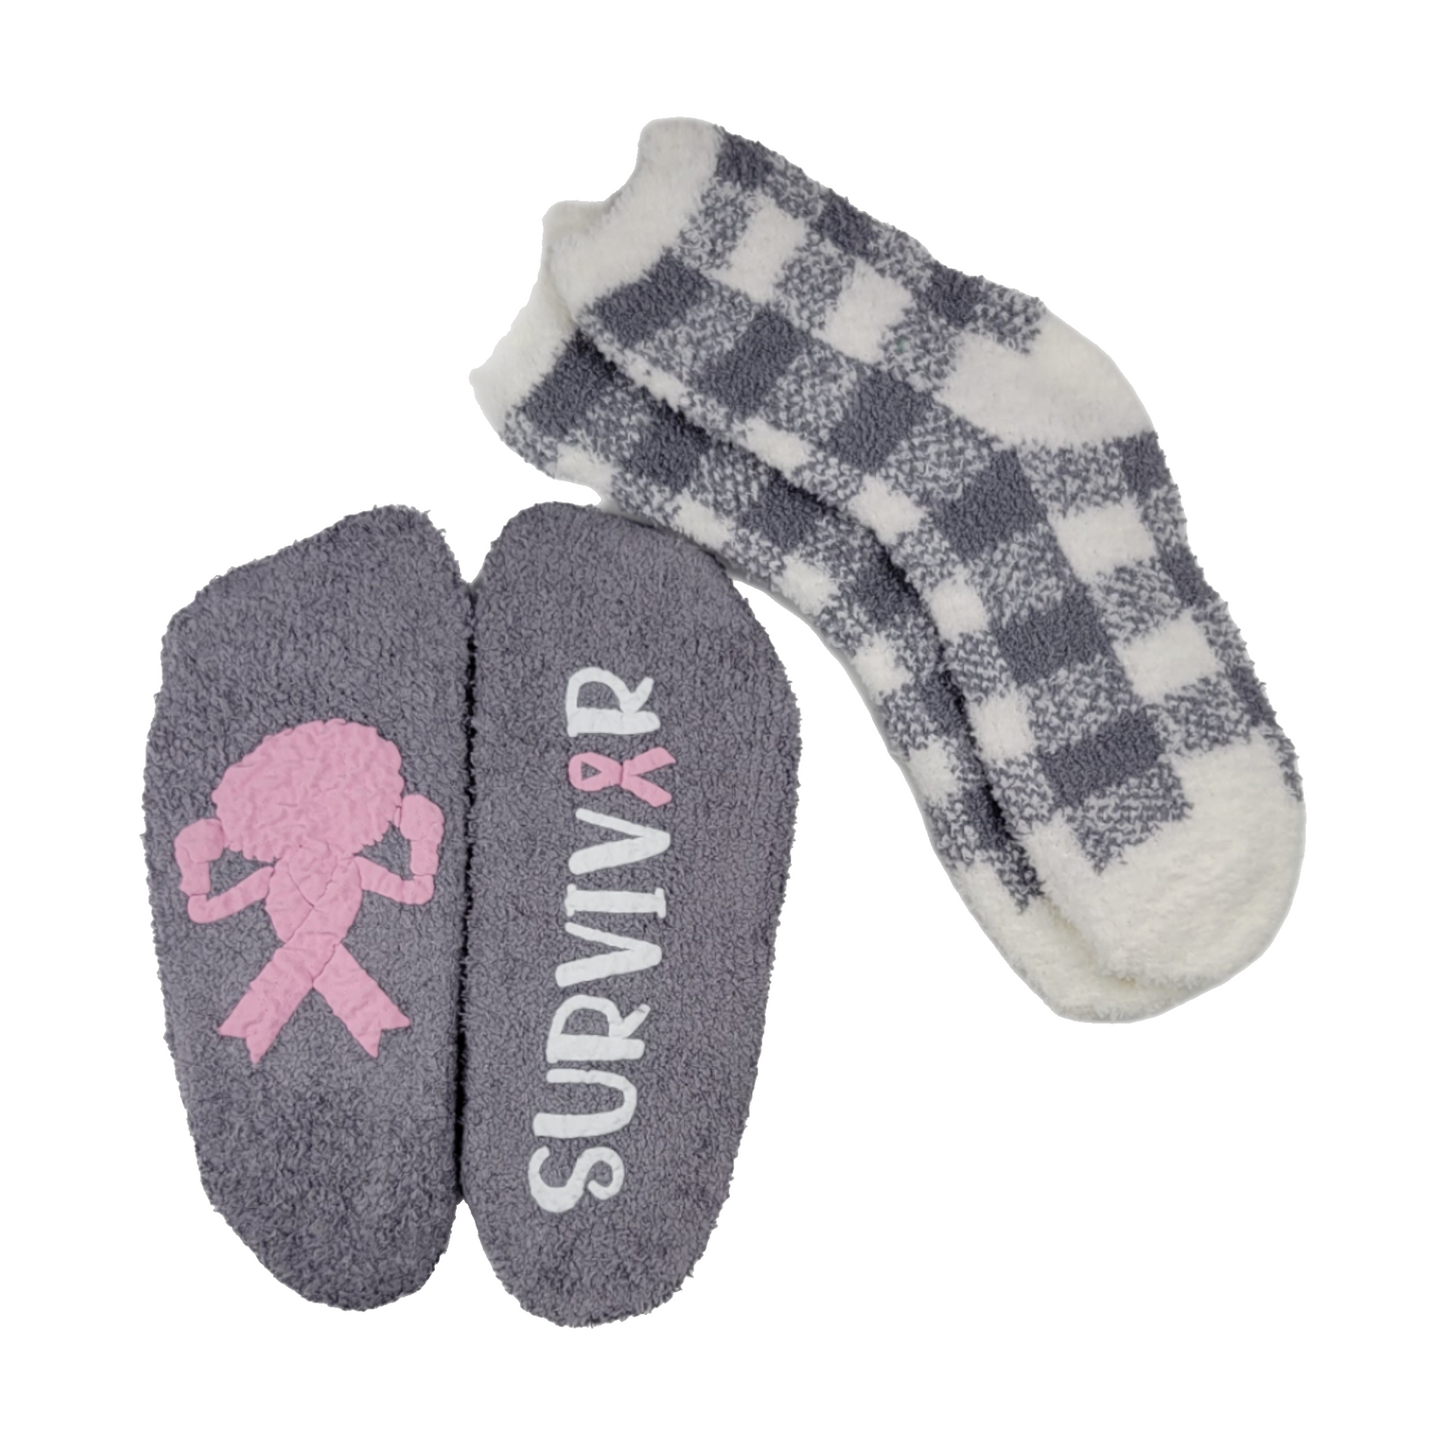 2 pair Fuzzy Socks with Puffy Design - Afro Survivor Breast Cancer - Dk Grey Buffalo Plaid